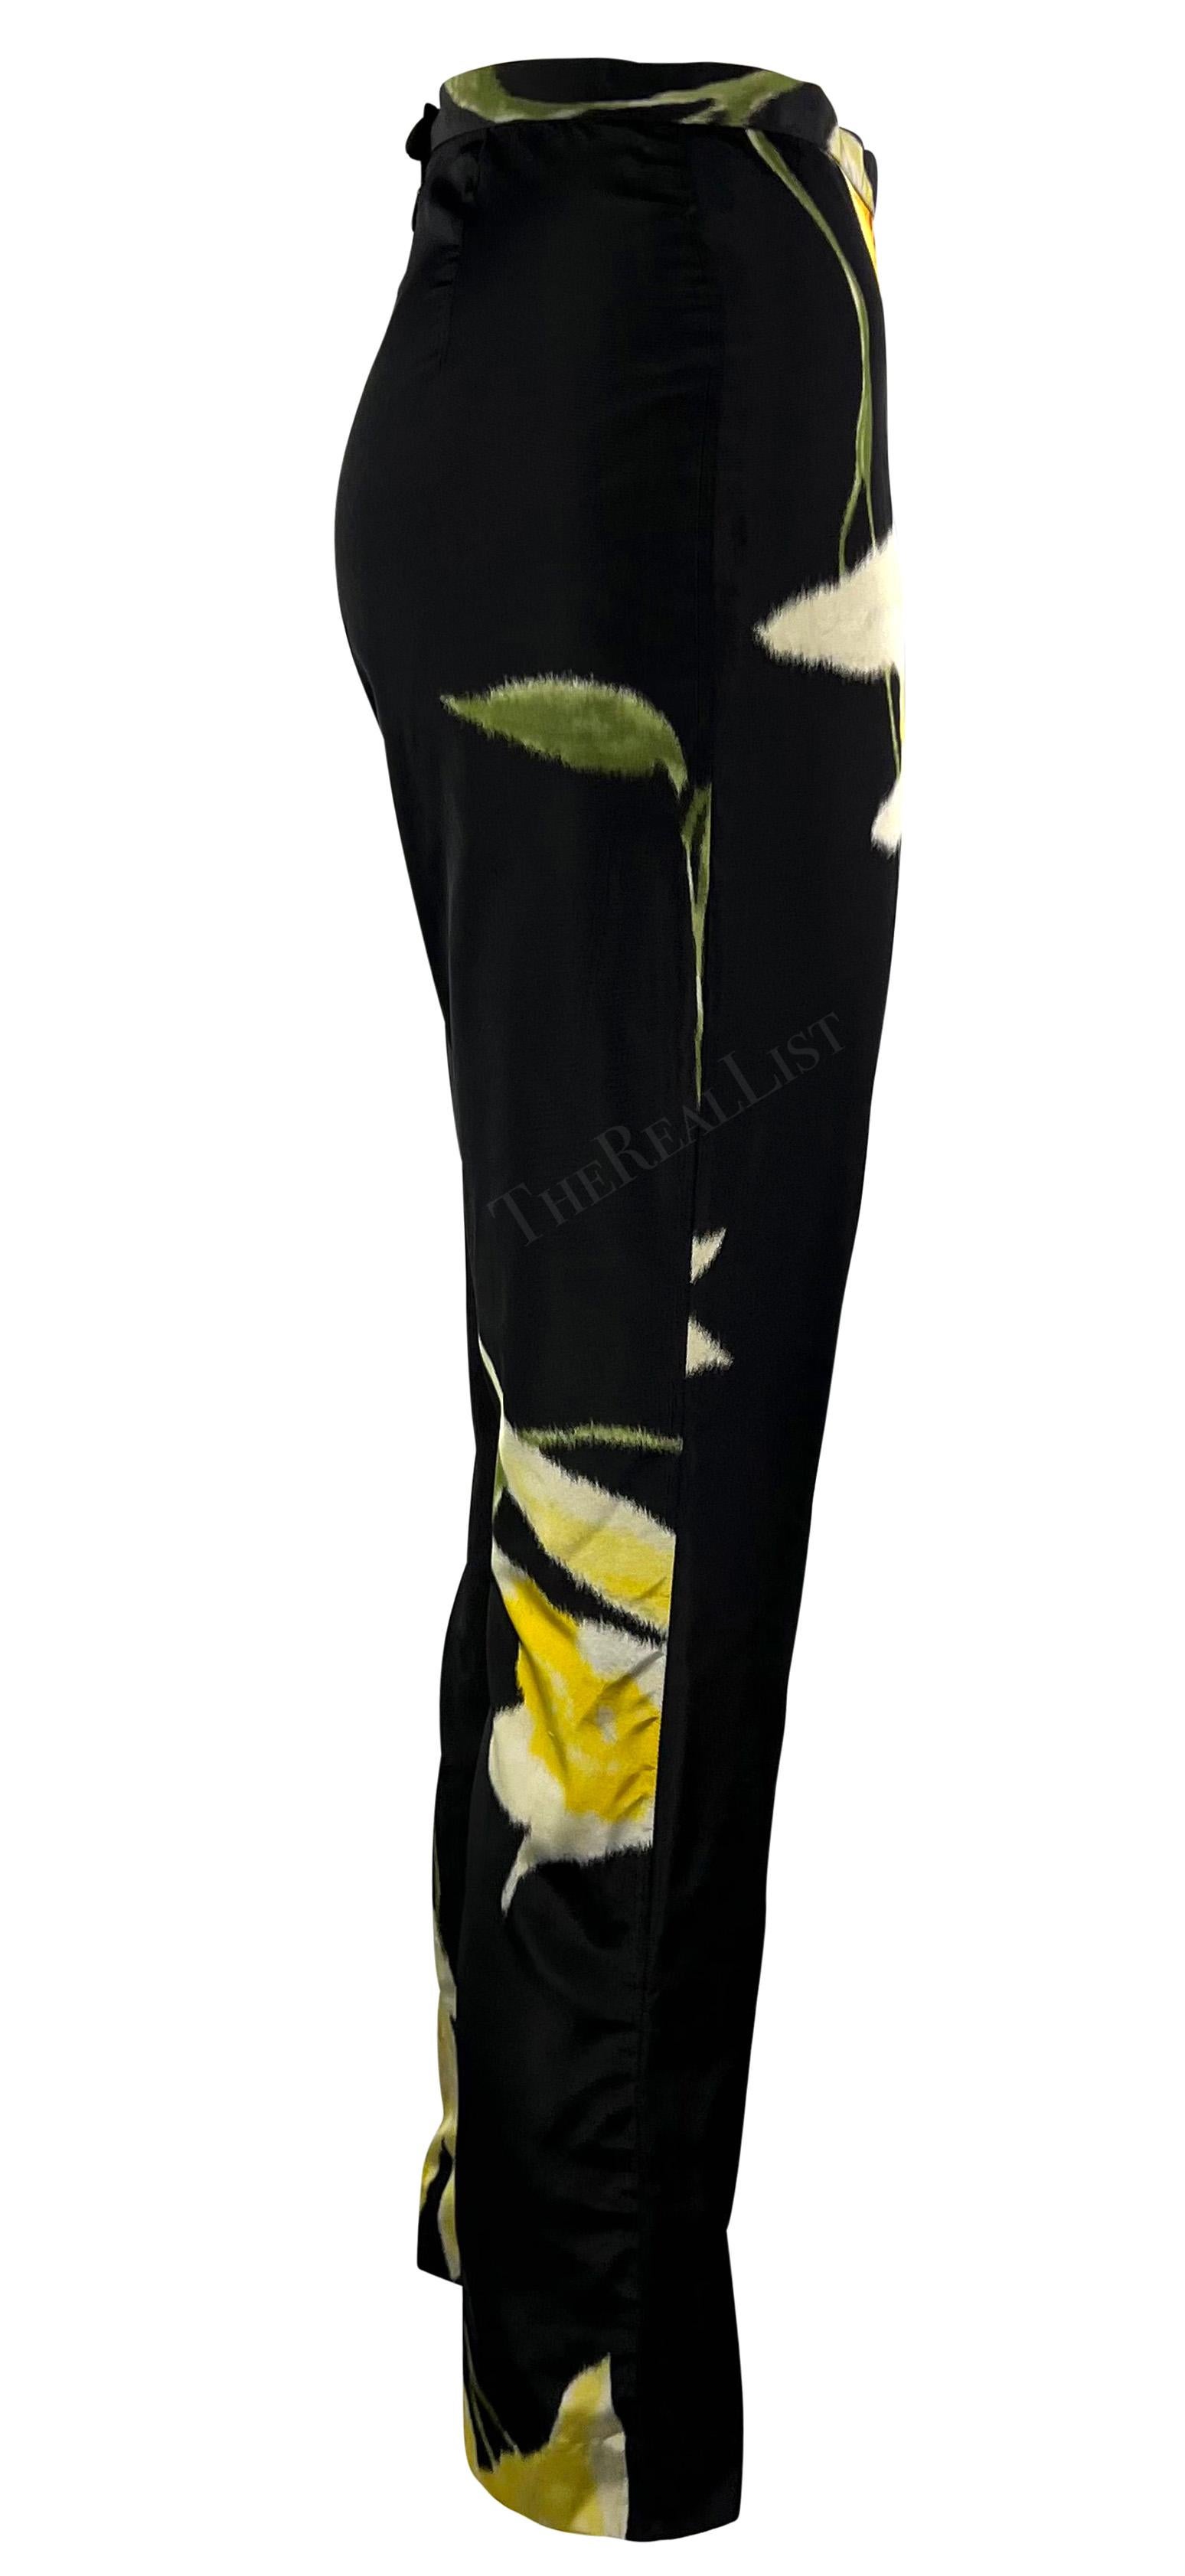 S/S 2000 Ralph Lauren Runway Black Silk Taffeta Yellow Floral Cigarette Pants For Sale 4